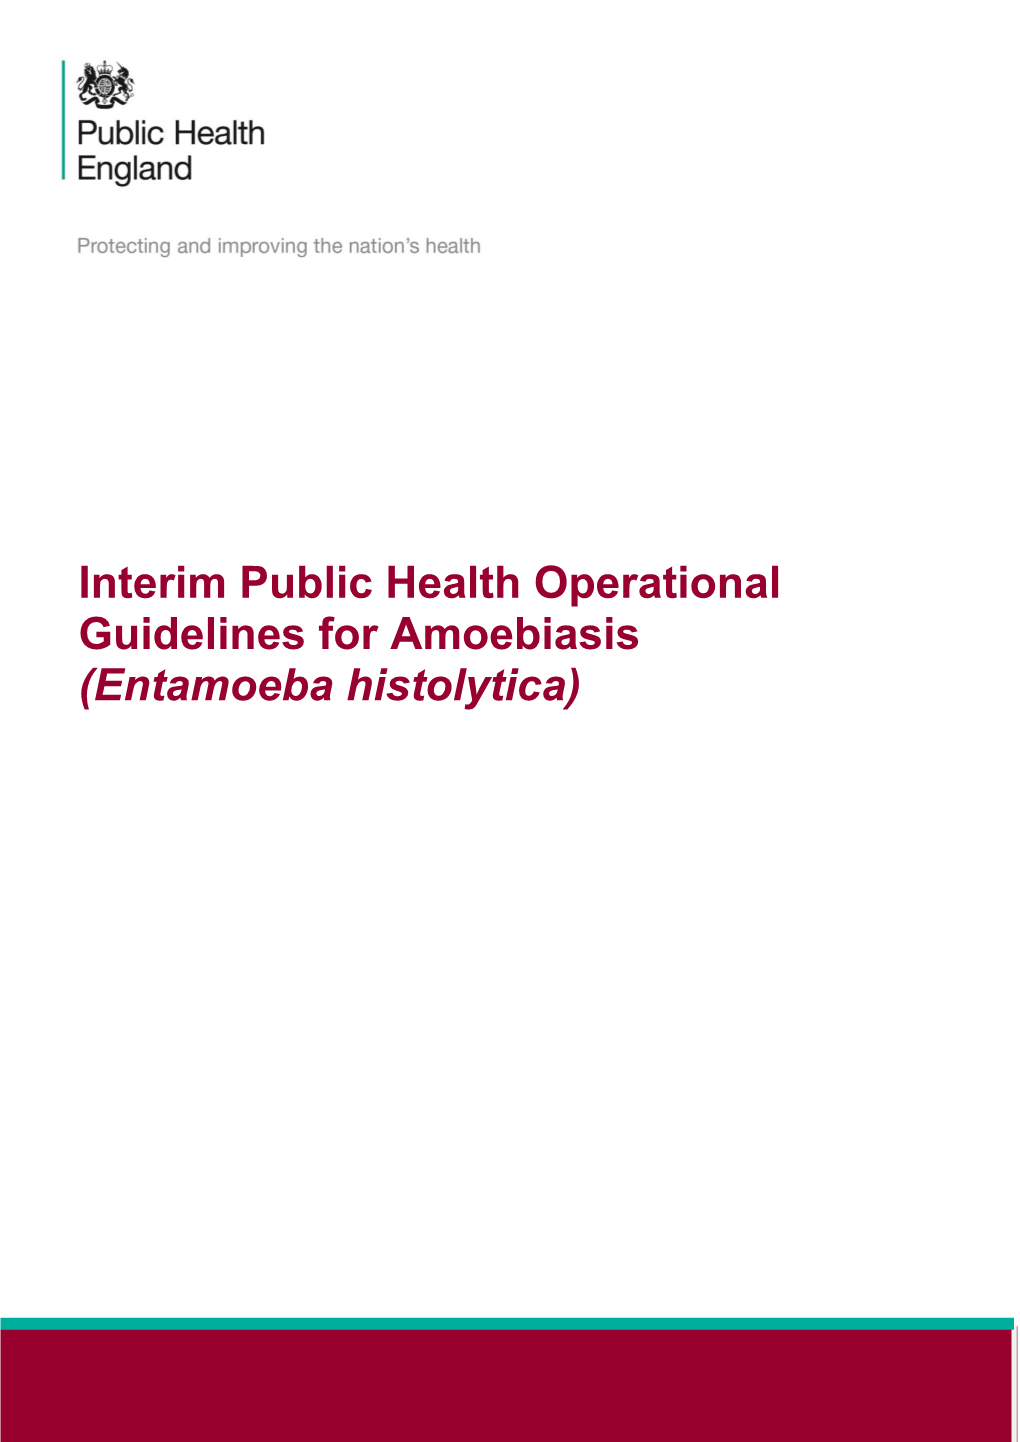 Interim Public Health Operational Guidelines for Amoebiasis (Entamoeba Histolytica)